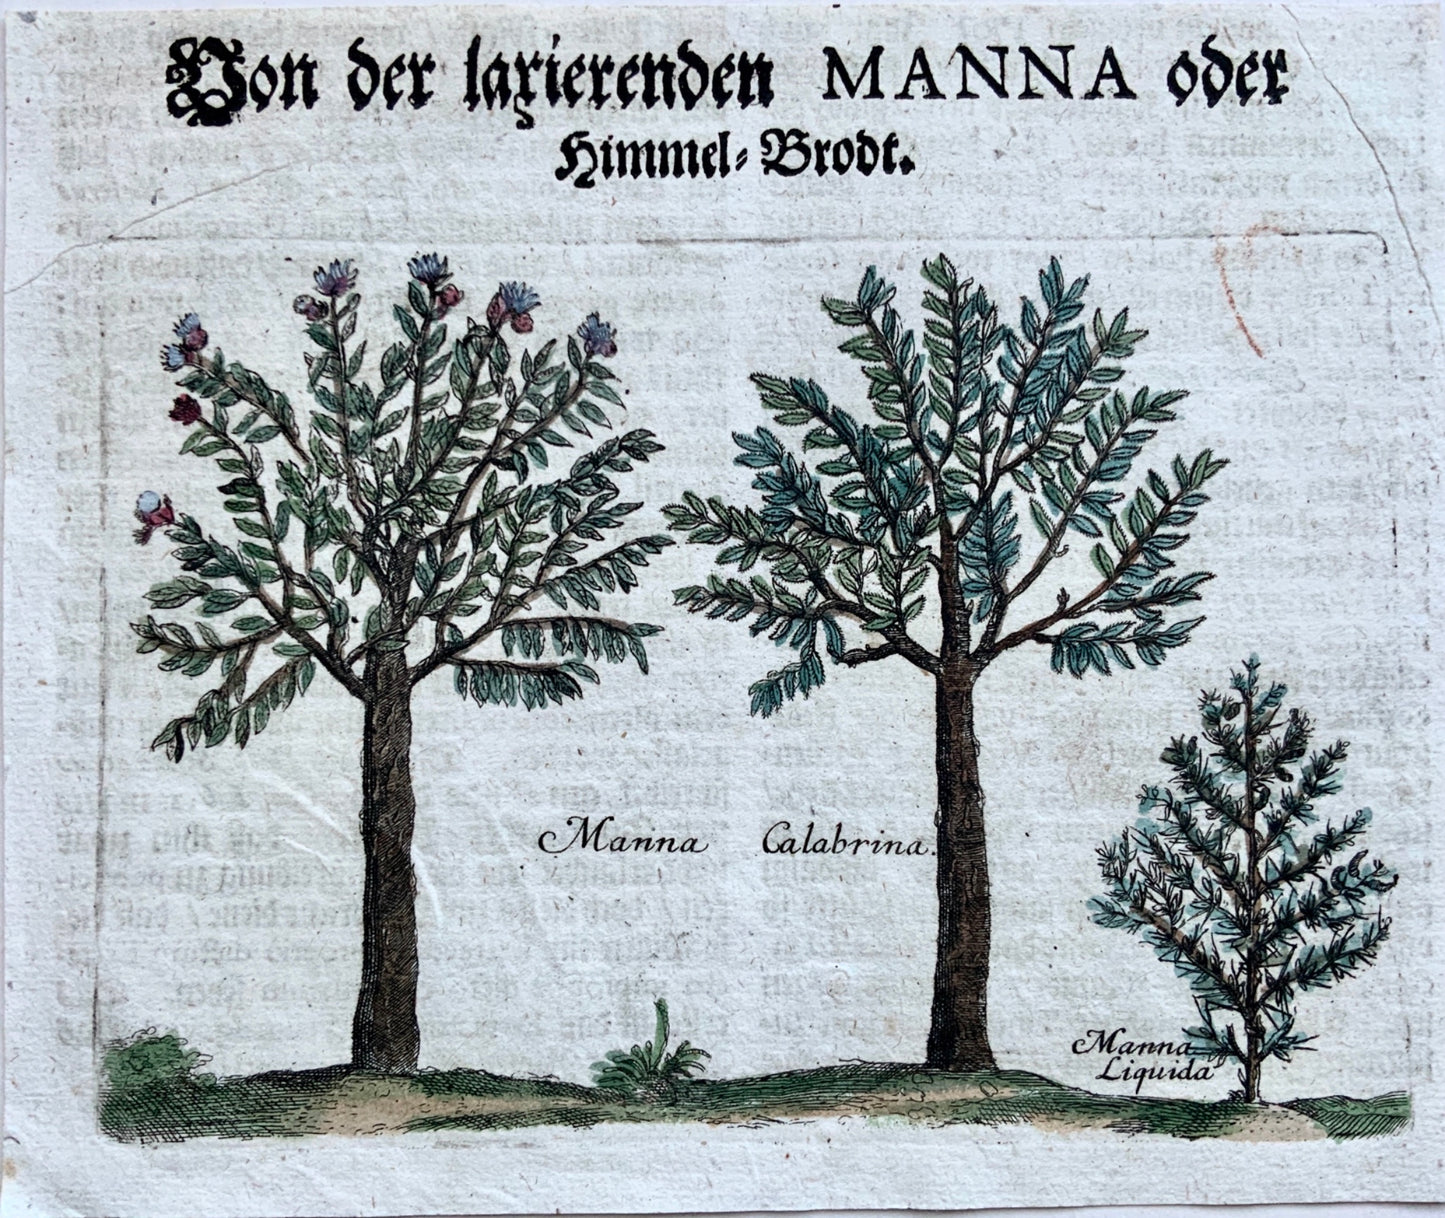 1704 Calabrian Manna - M. Valentini (1657-1729) - copper engraving - Botany